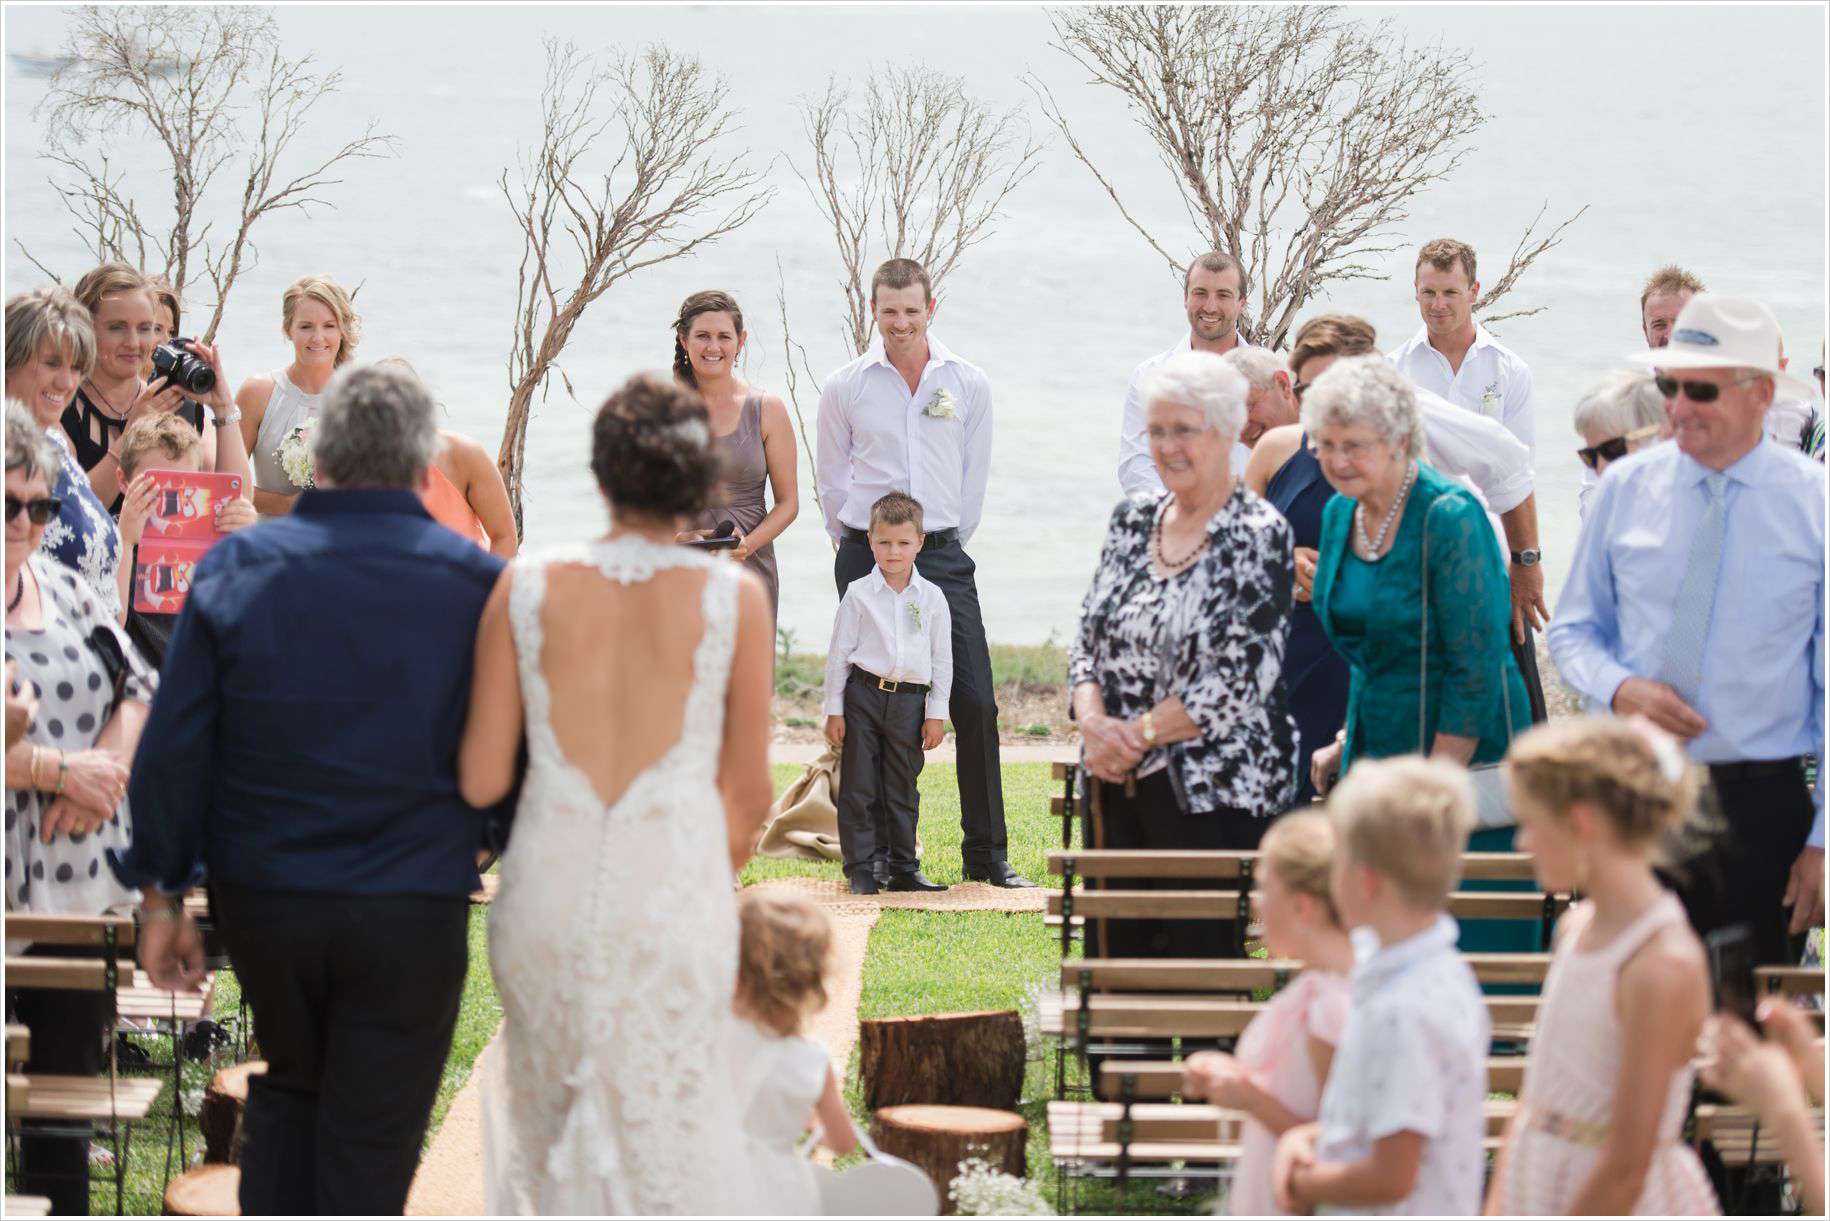  Family wedding photographer streaky bay